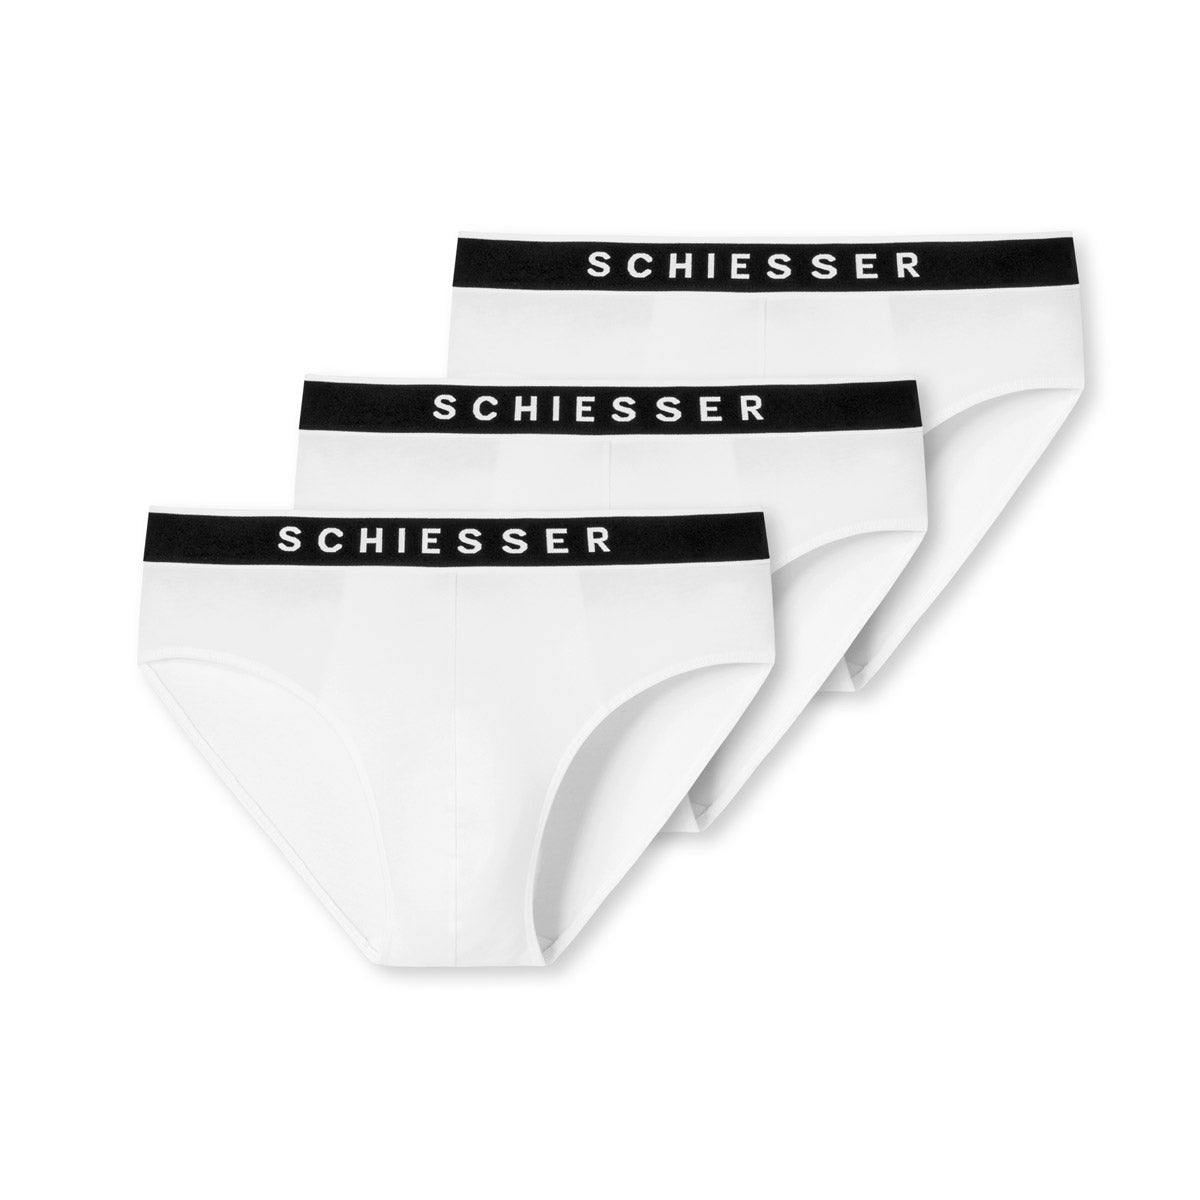 White Schiesser men's underpants